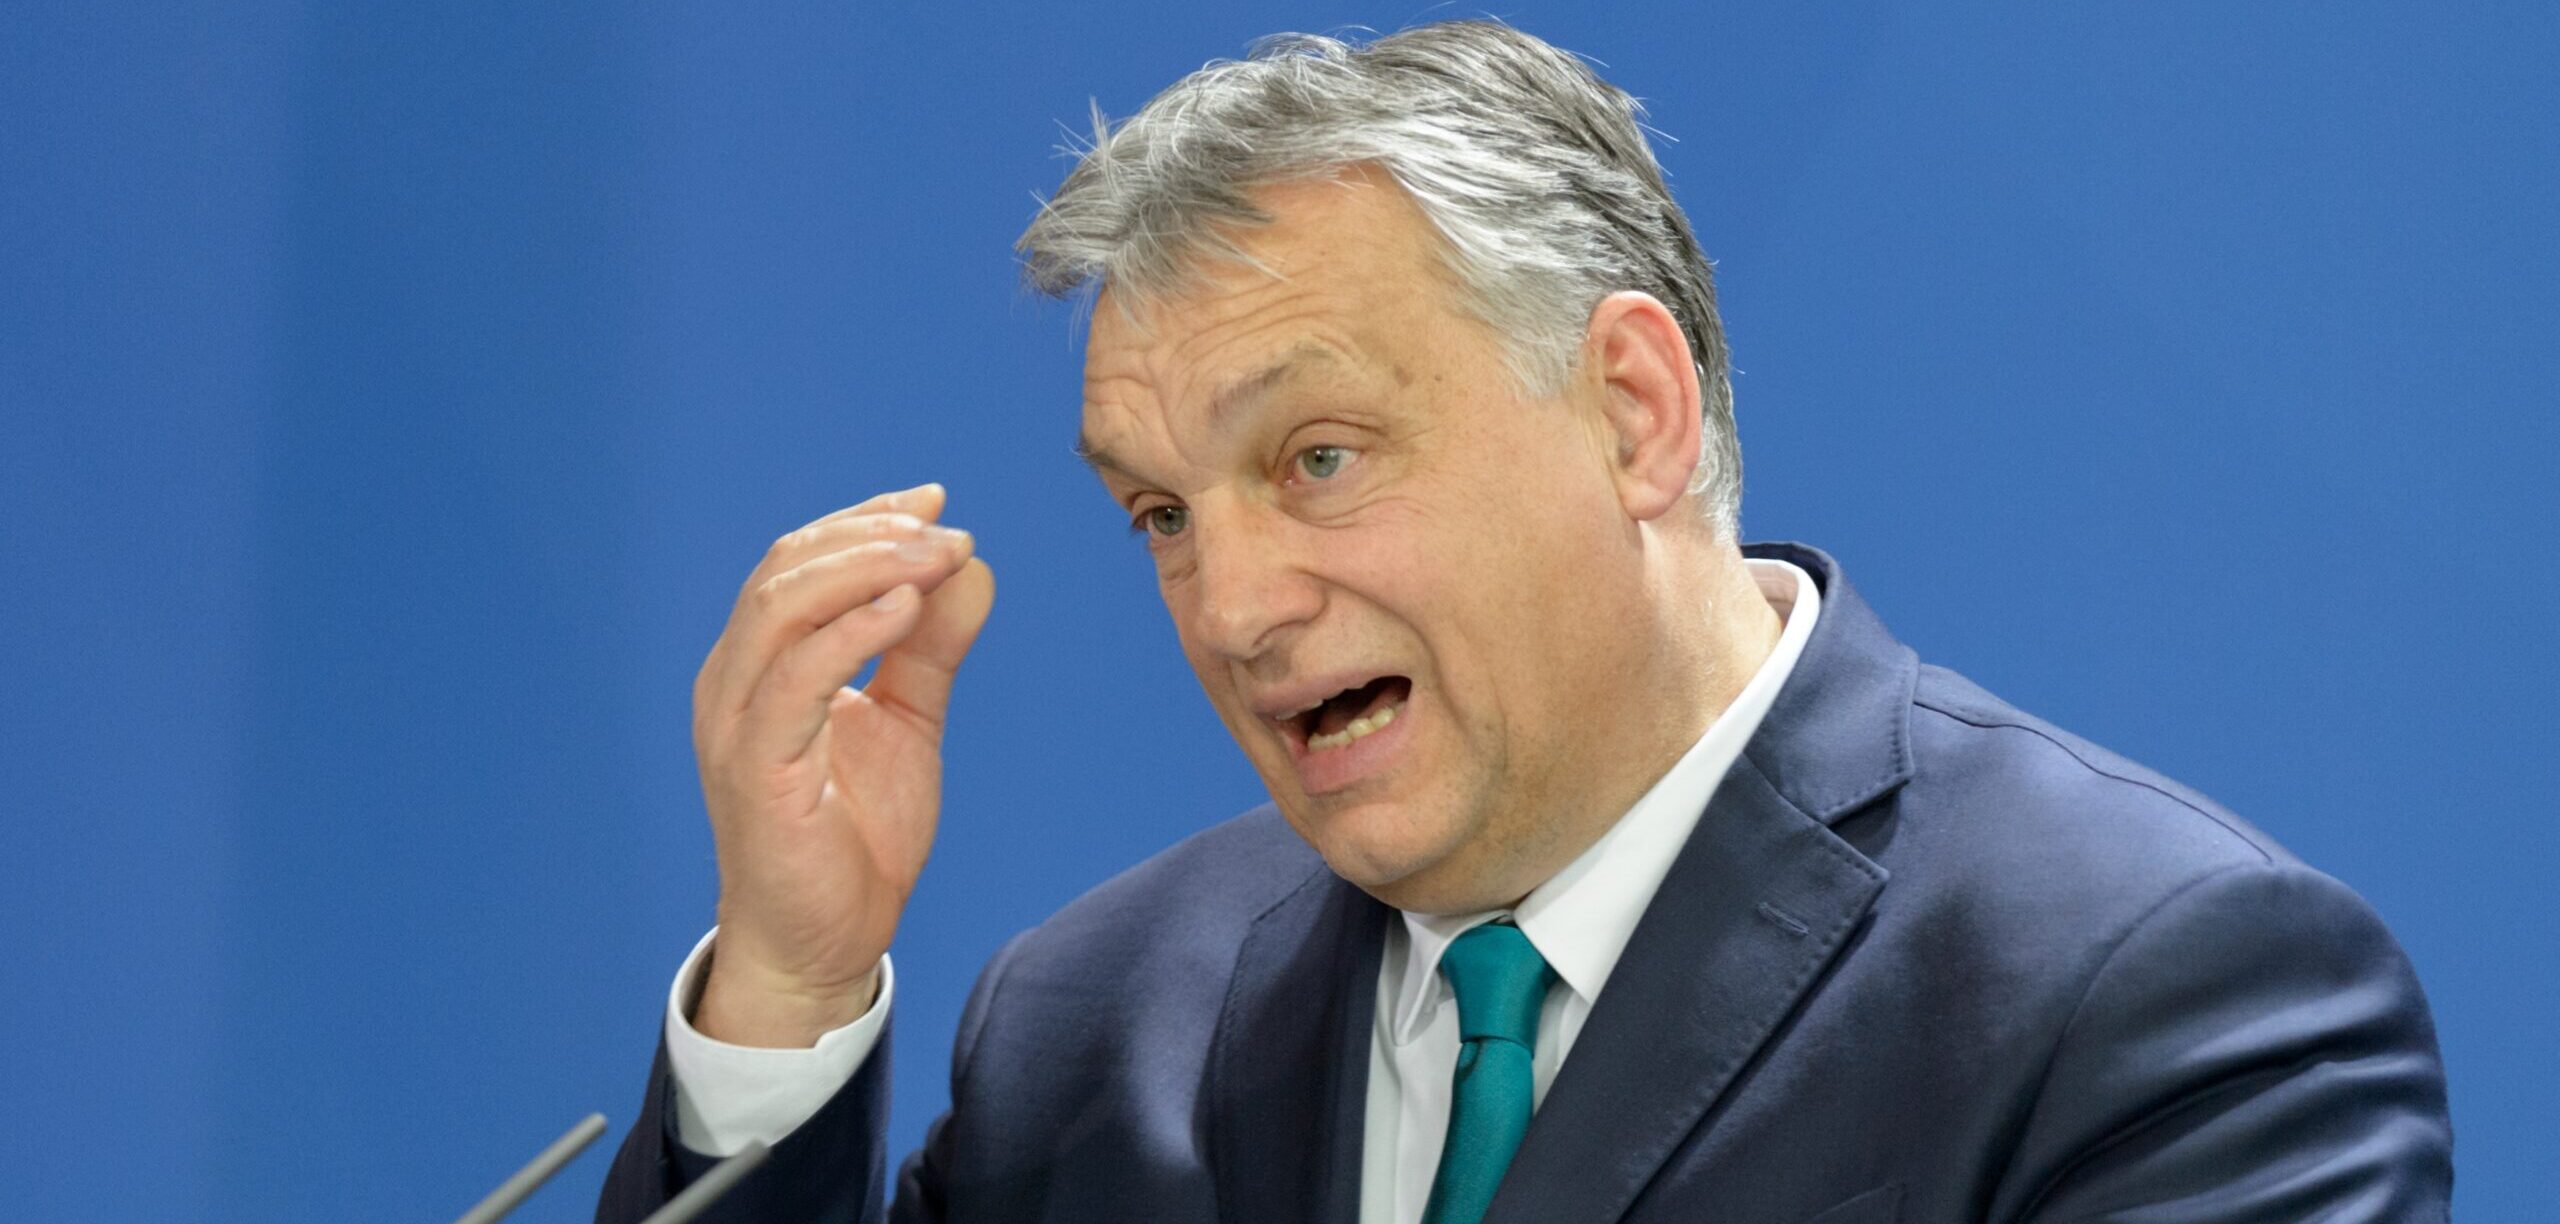 EU prepares tough measures against Hungary over Ukraine after February 1 Summit